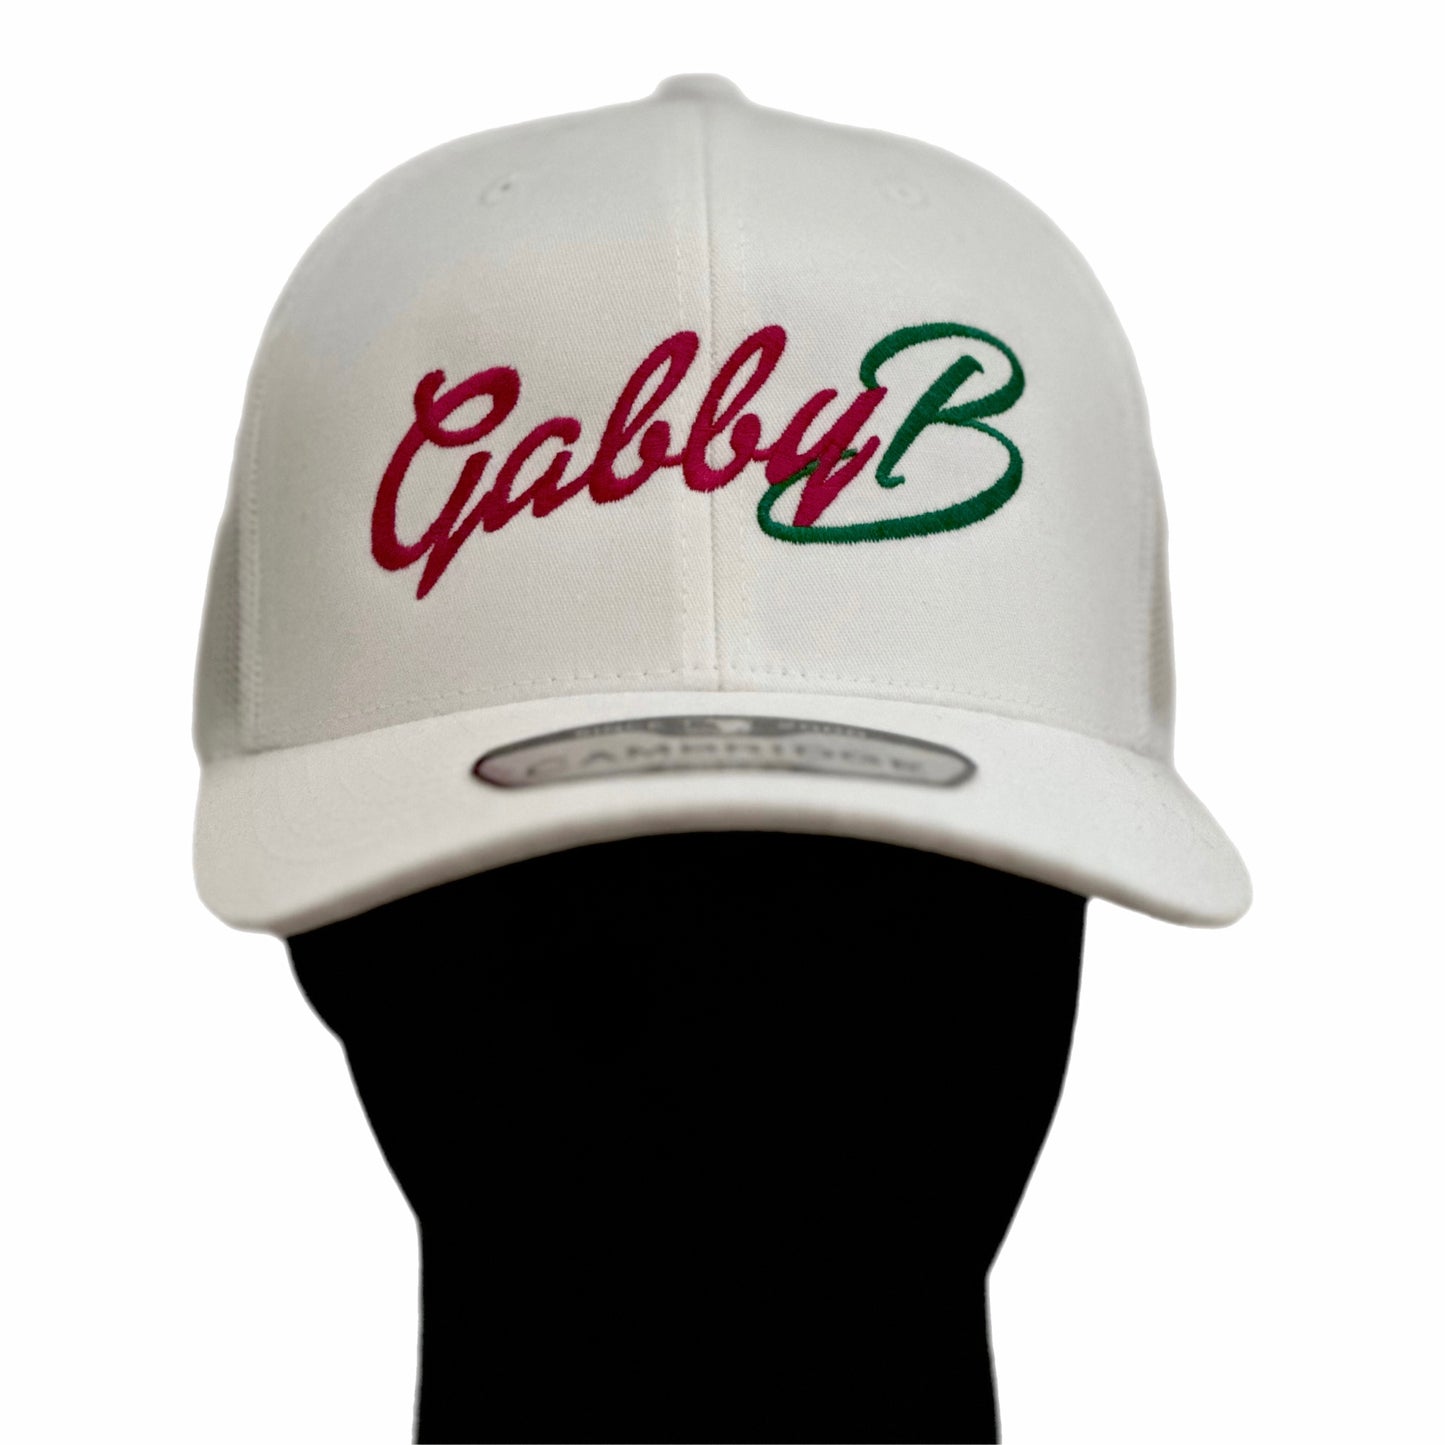 White Snap Back "Gabby B" Hat